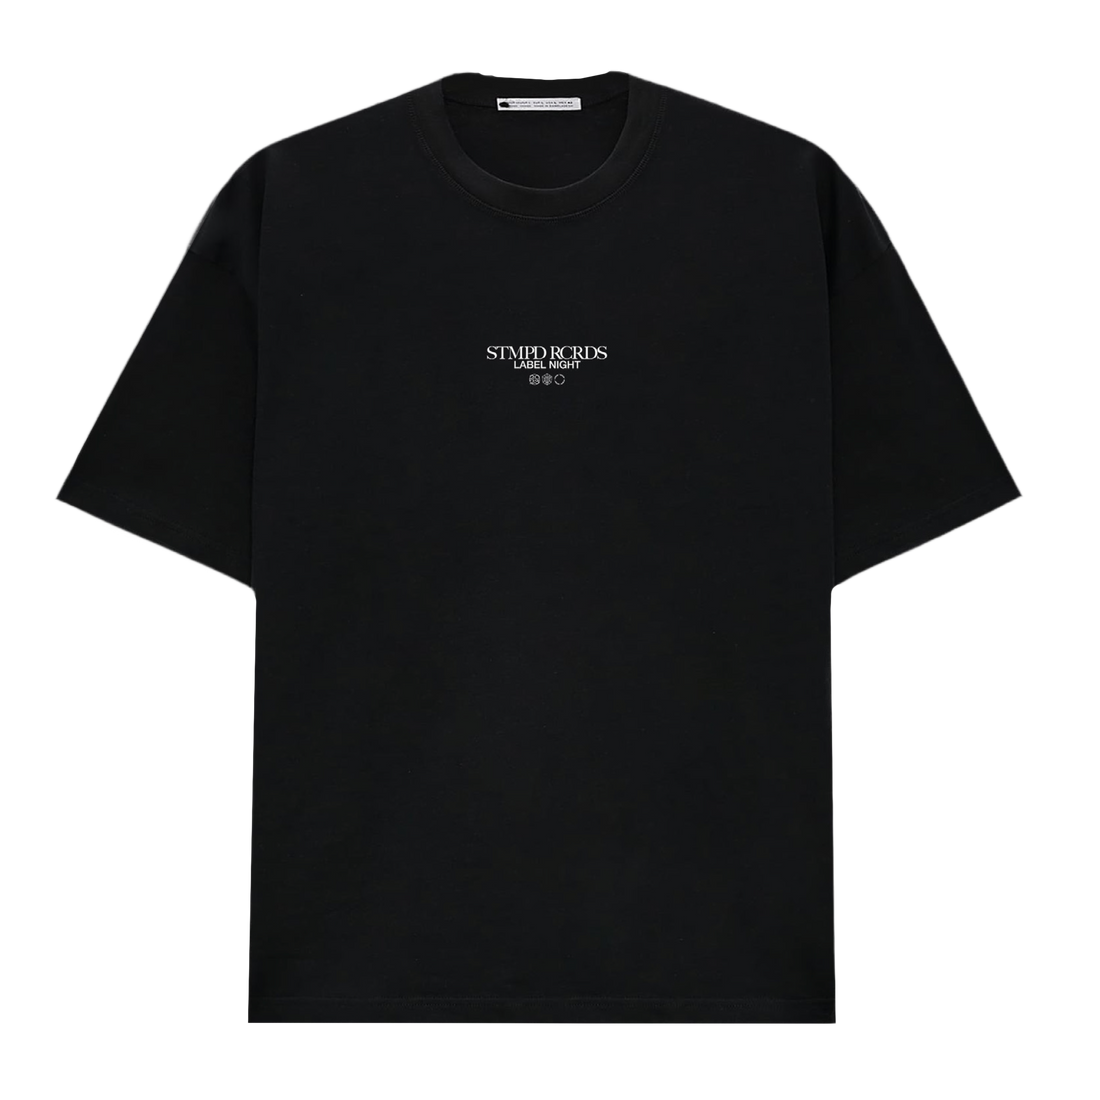 STMPD Label Night T-Shirt